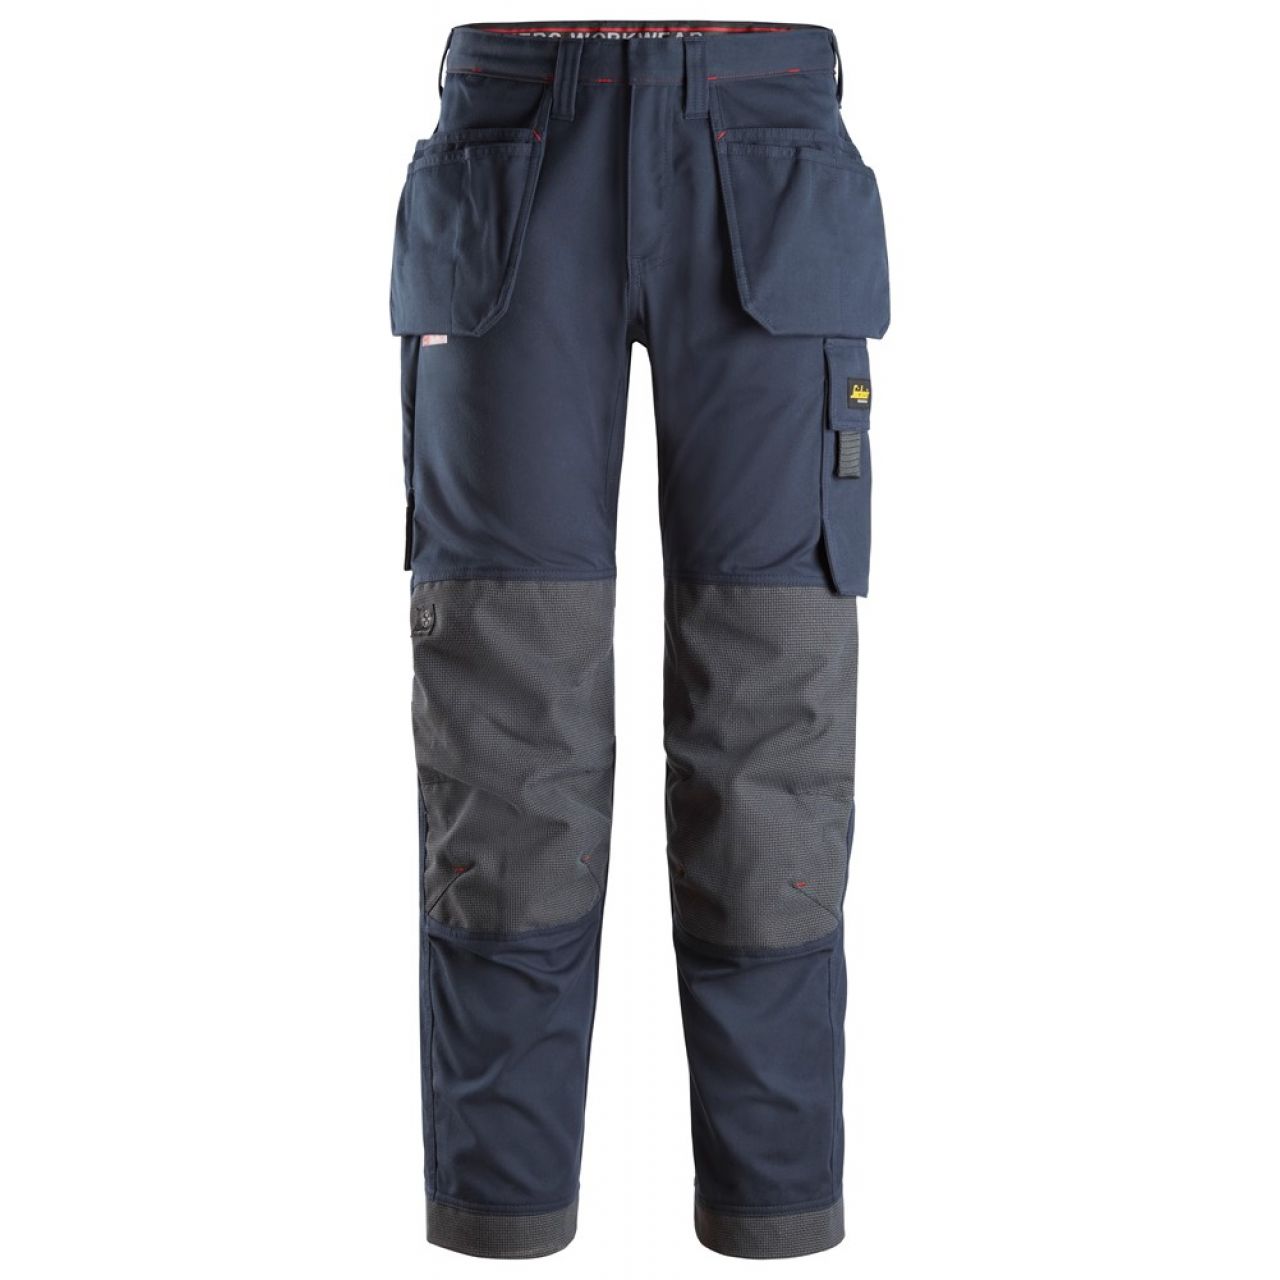 6286 Pantalones largos de trabajo con bolsillos flotantes ProtecWork azul marino talla 92